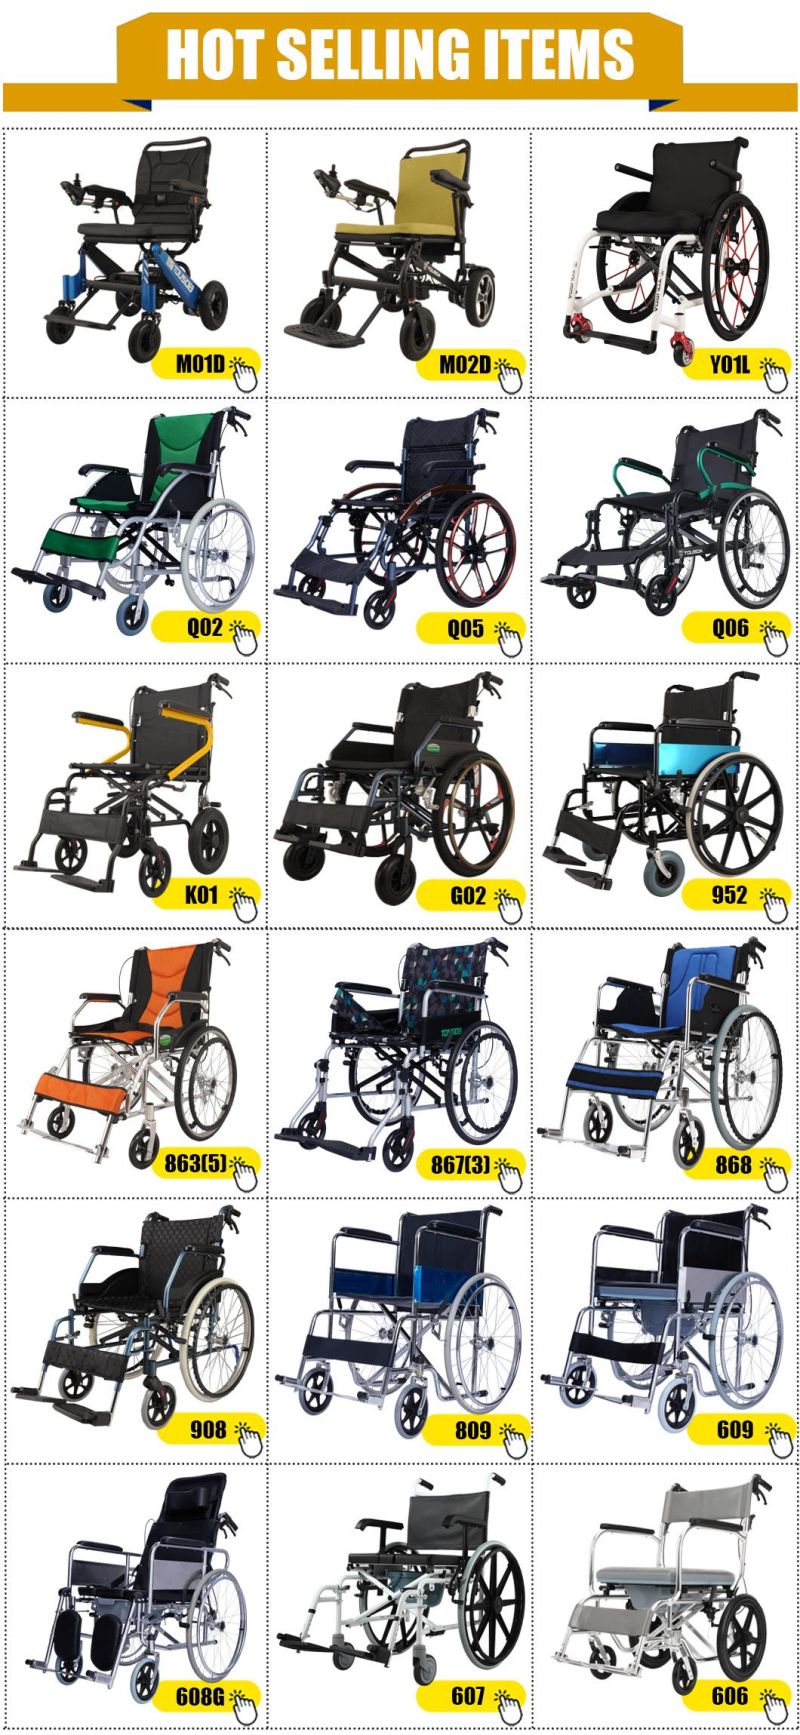 Ultralight Portable Magnesium Aluminum Electric Wheelchair